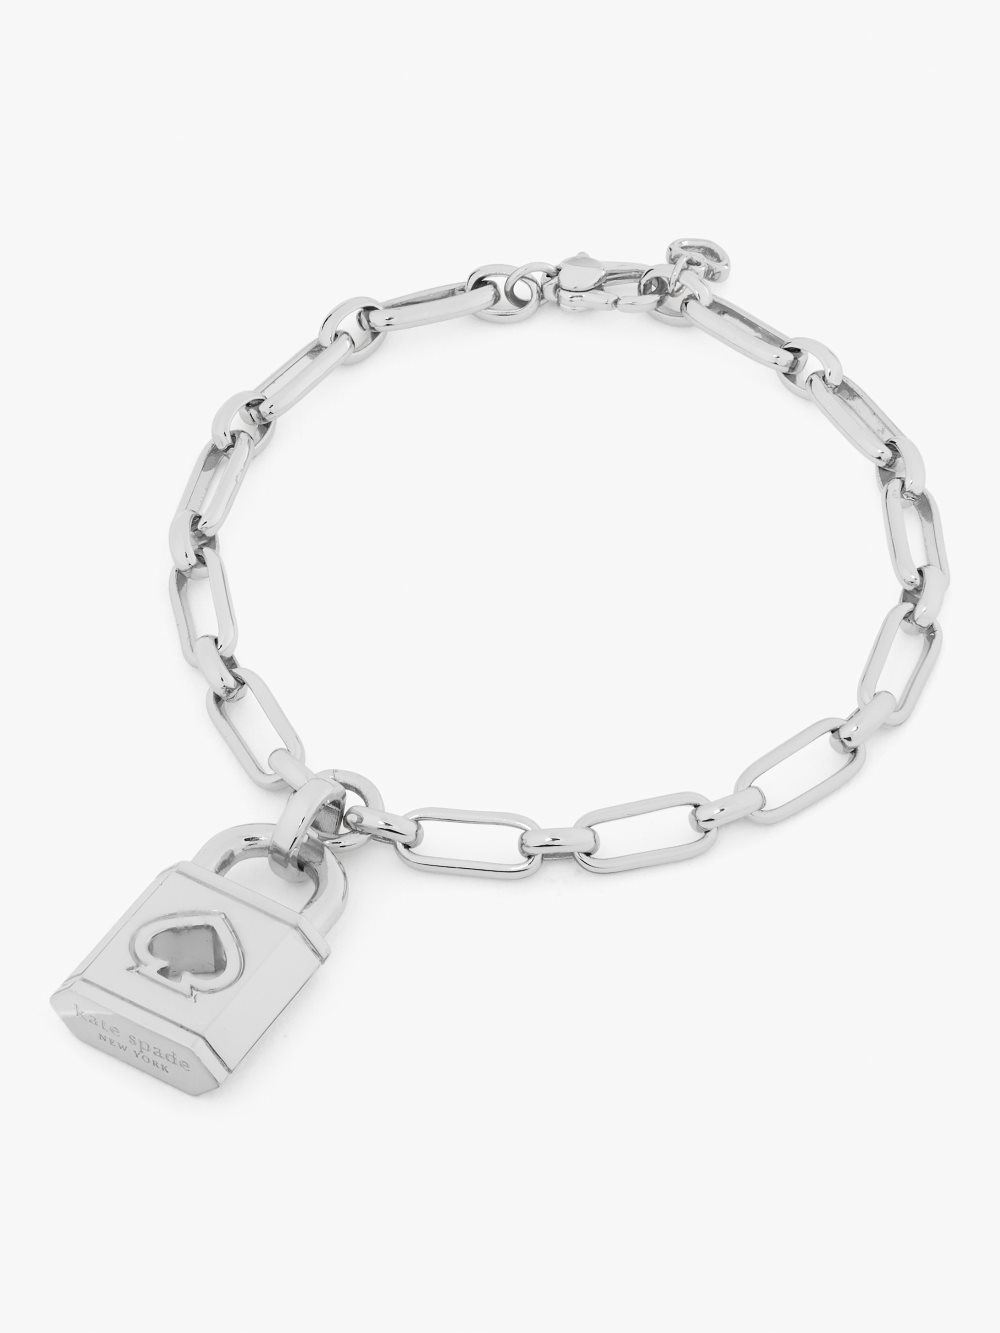 Women's silver lock and spade charm bracelet | Kate Spade